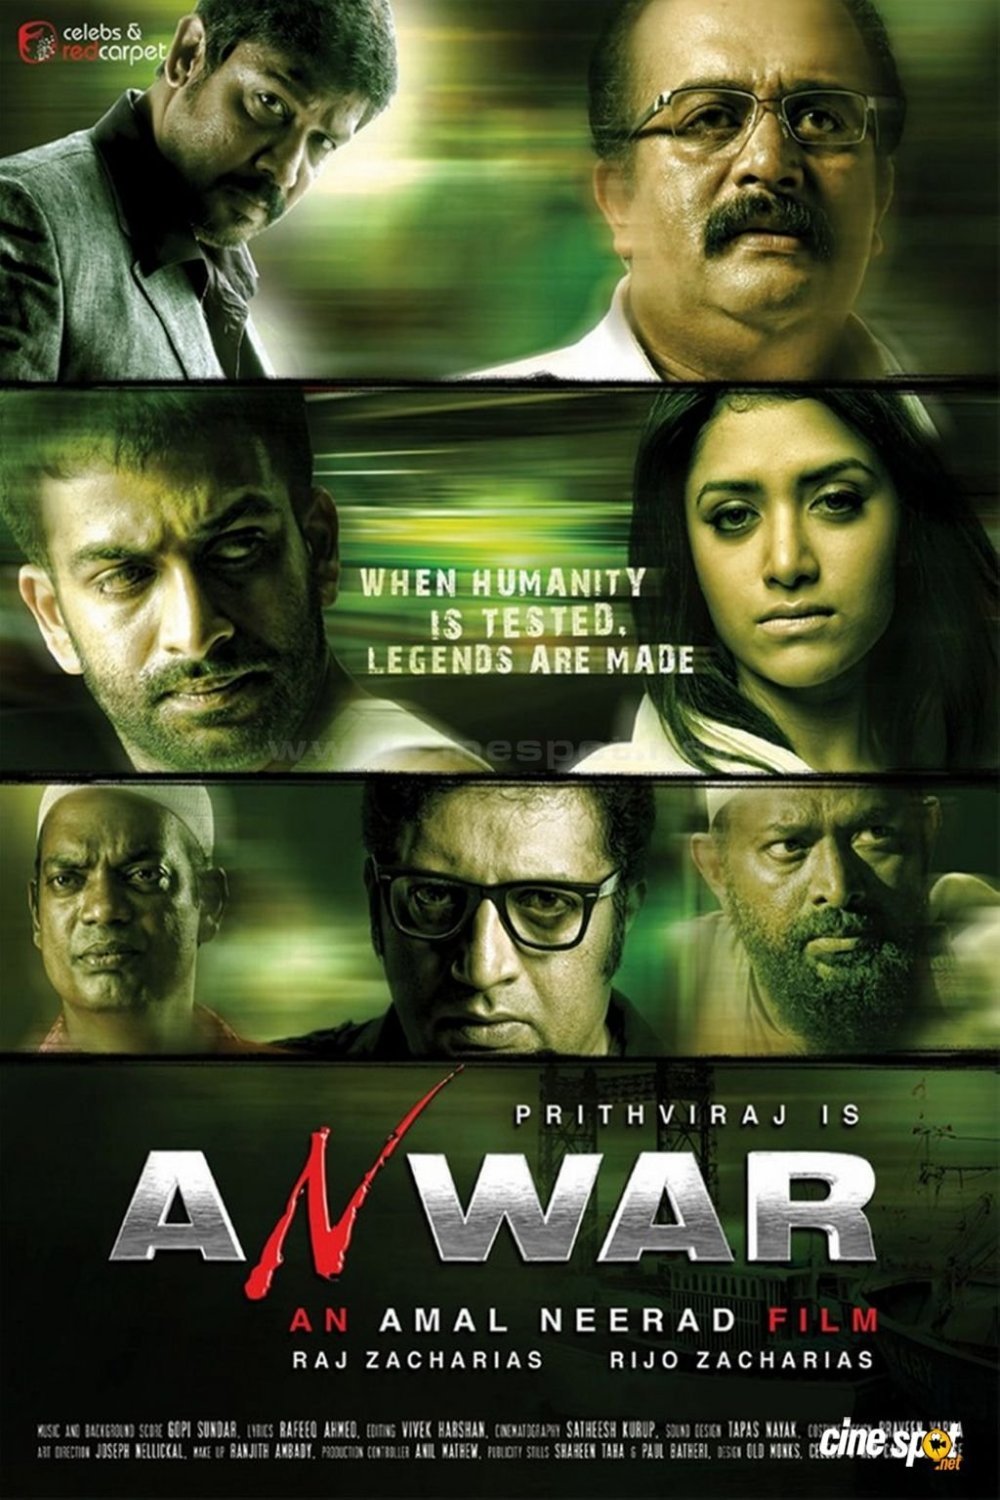 Malayalam poster of the movie Anwar